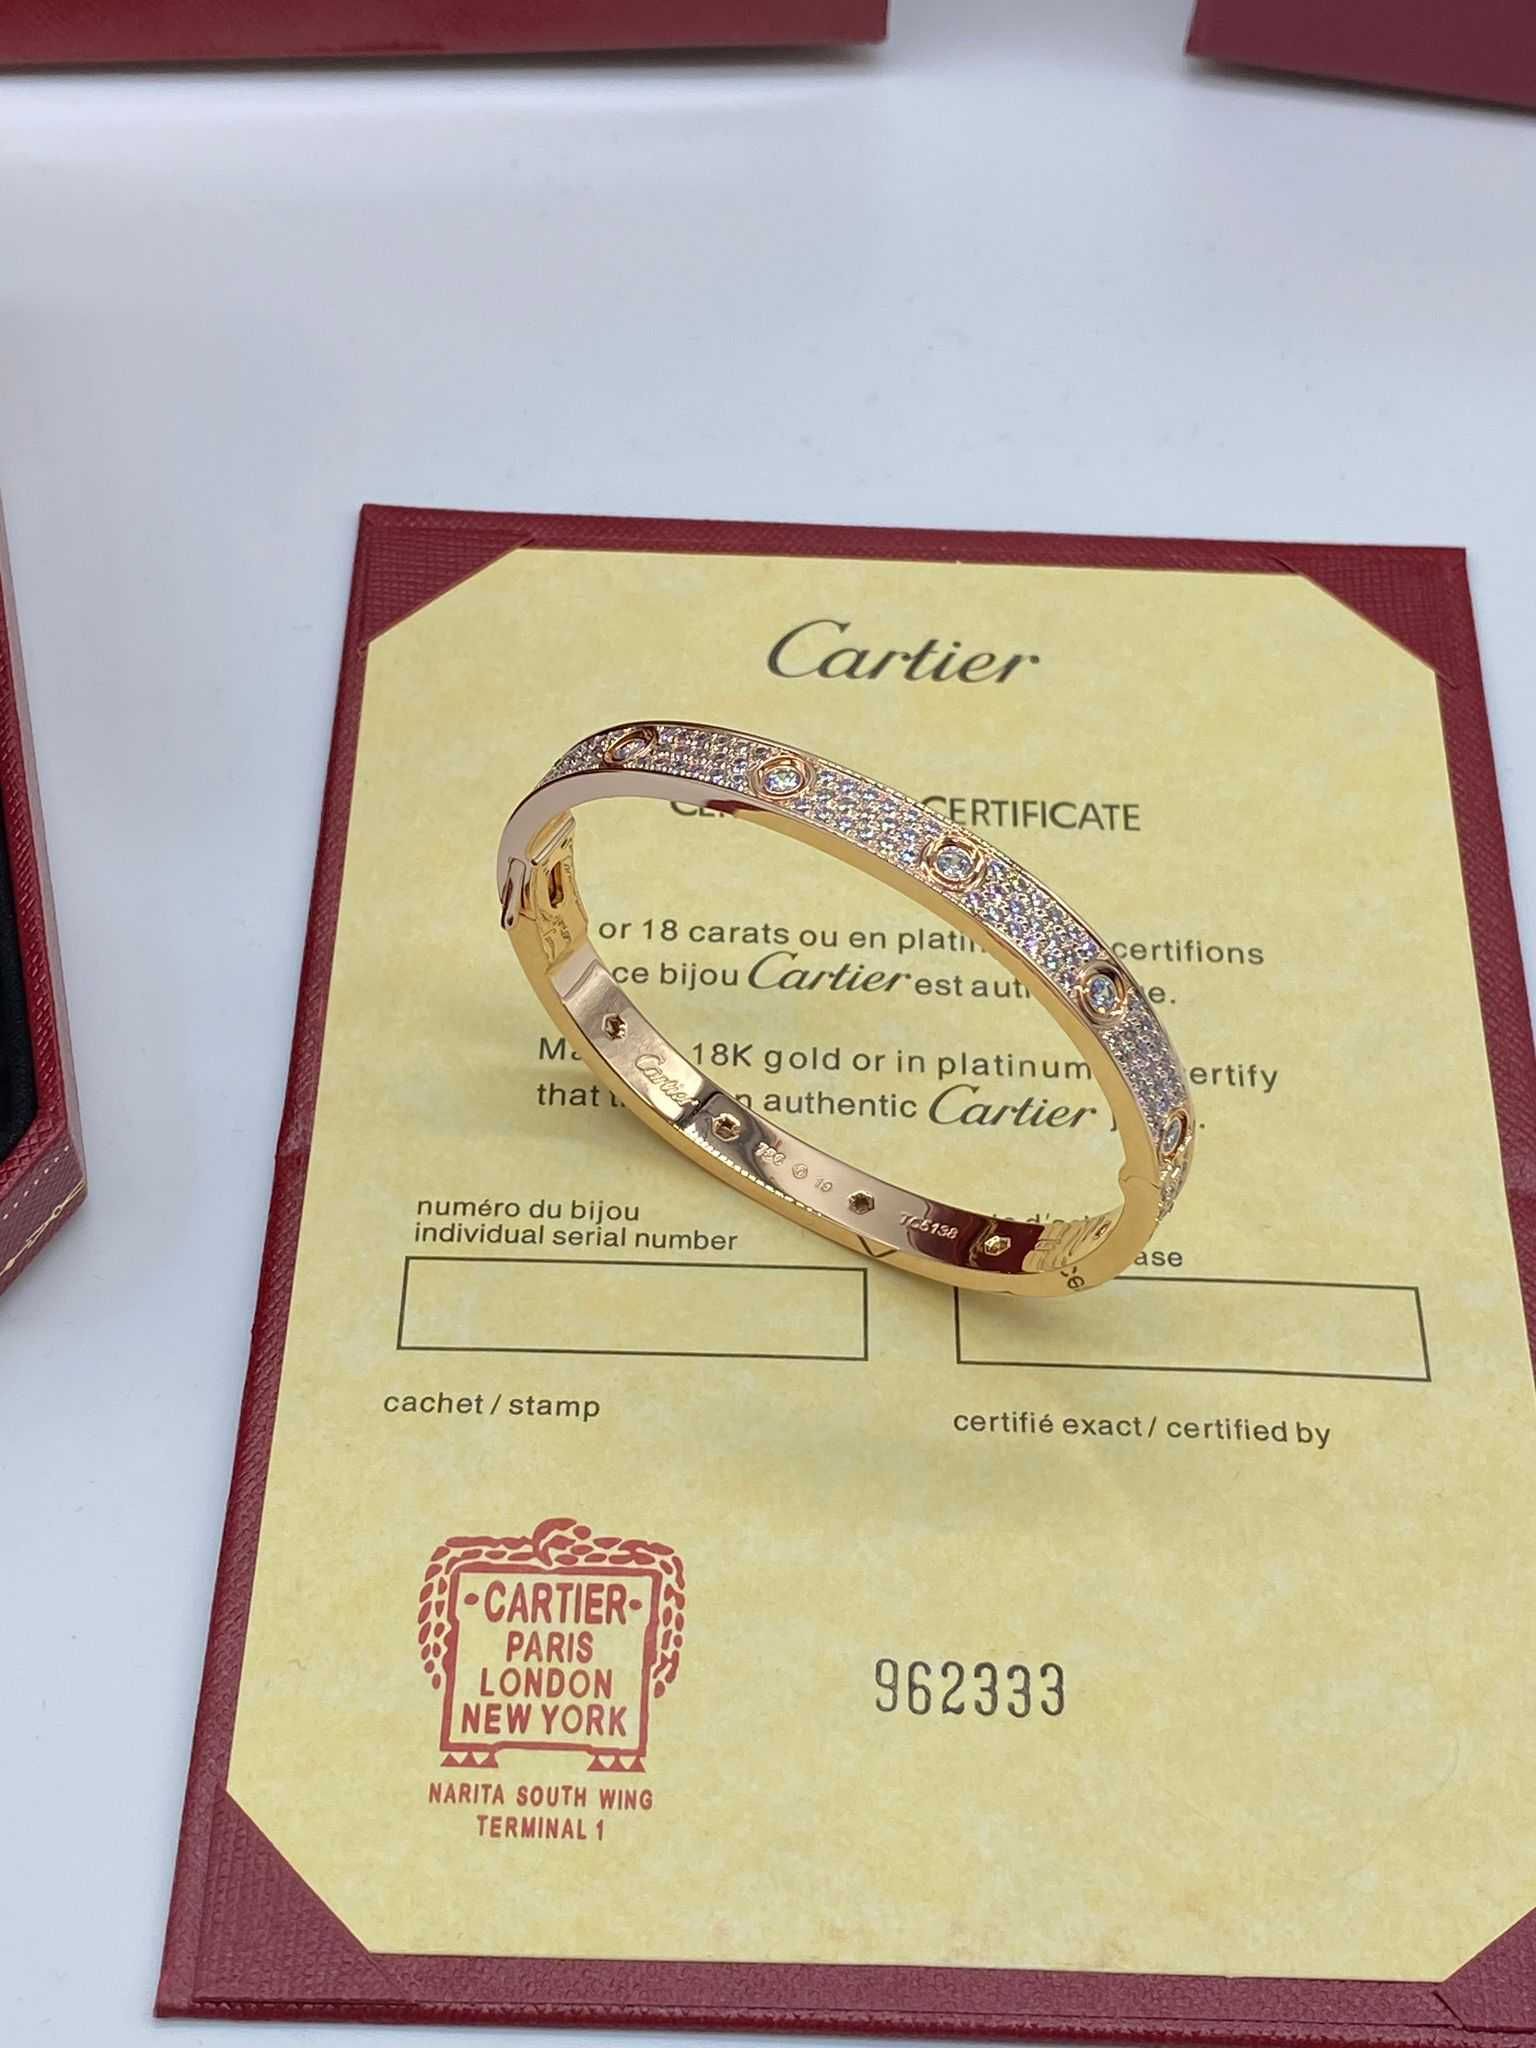 Brățară Cartier LOVE 16 Rose Gold 585 Full Diamond Full Box